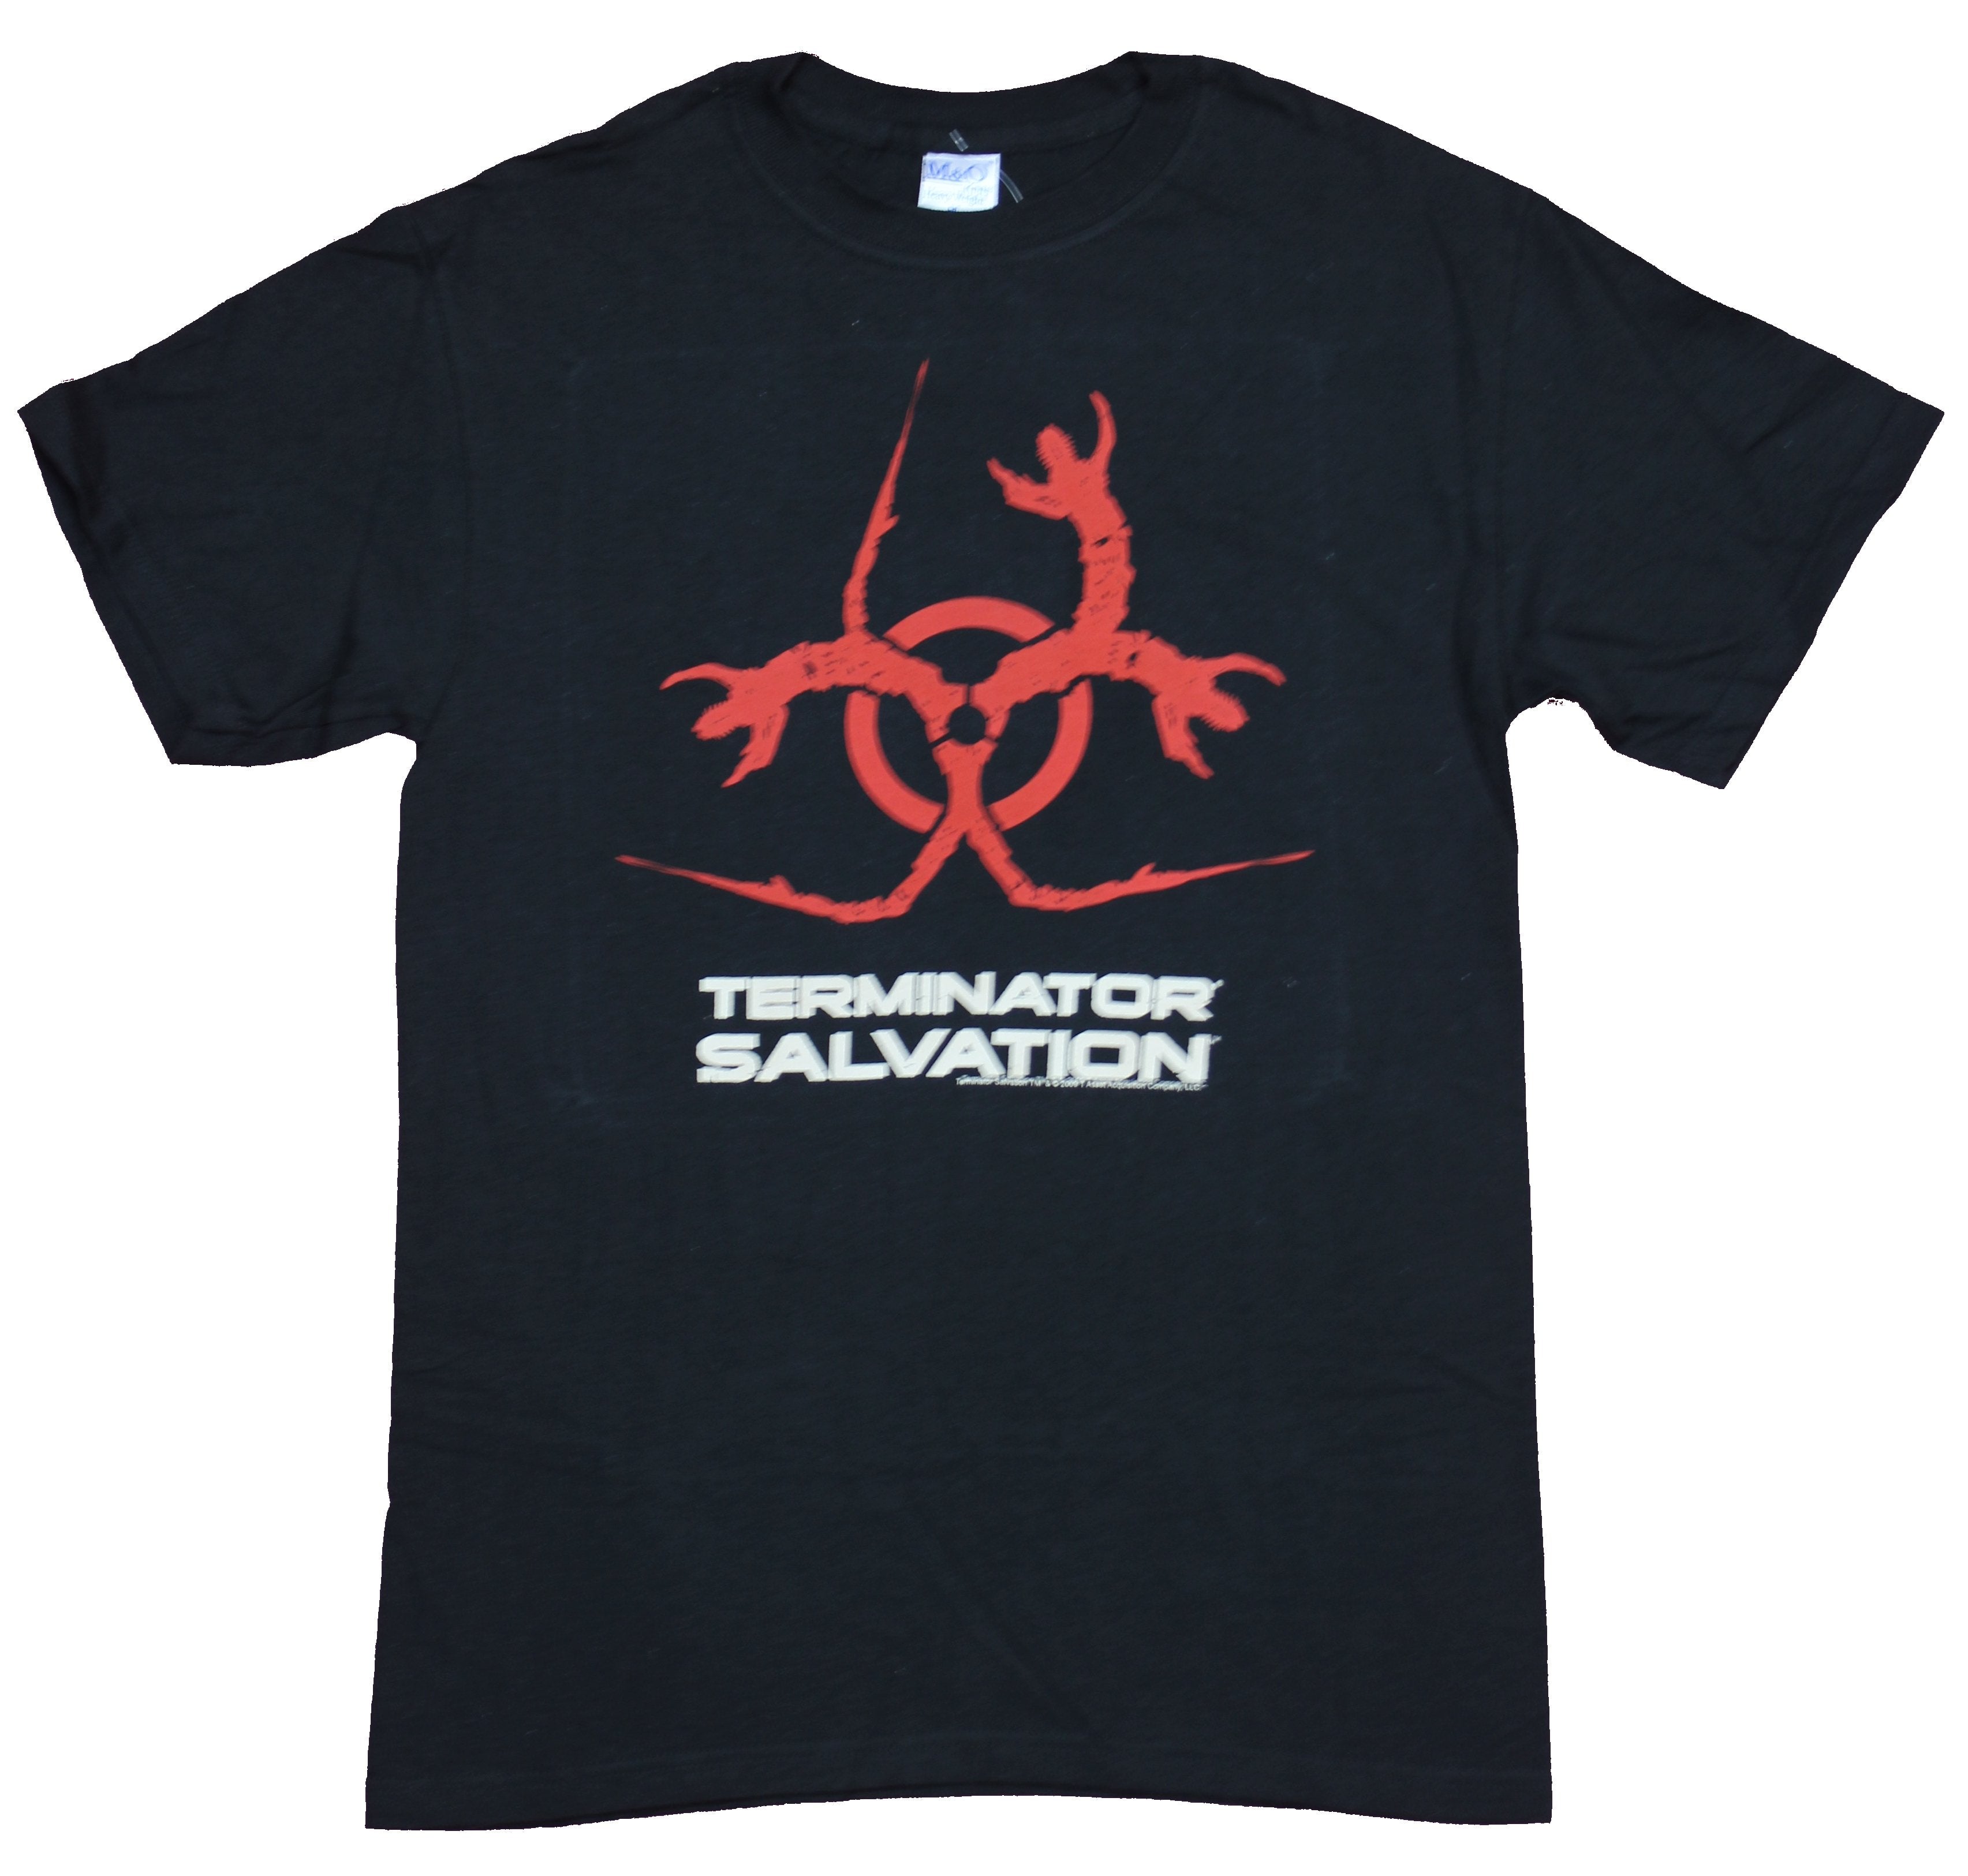 Terminator Salvation Mens T-Shirt ? Bio hazard Style Logo